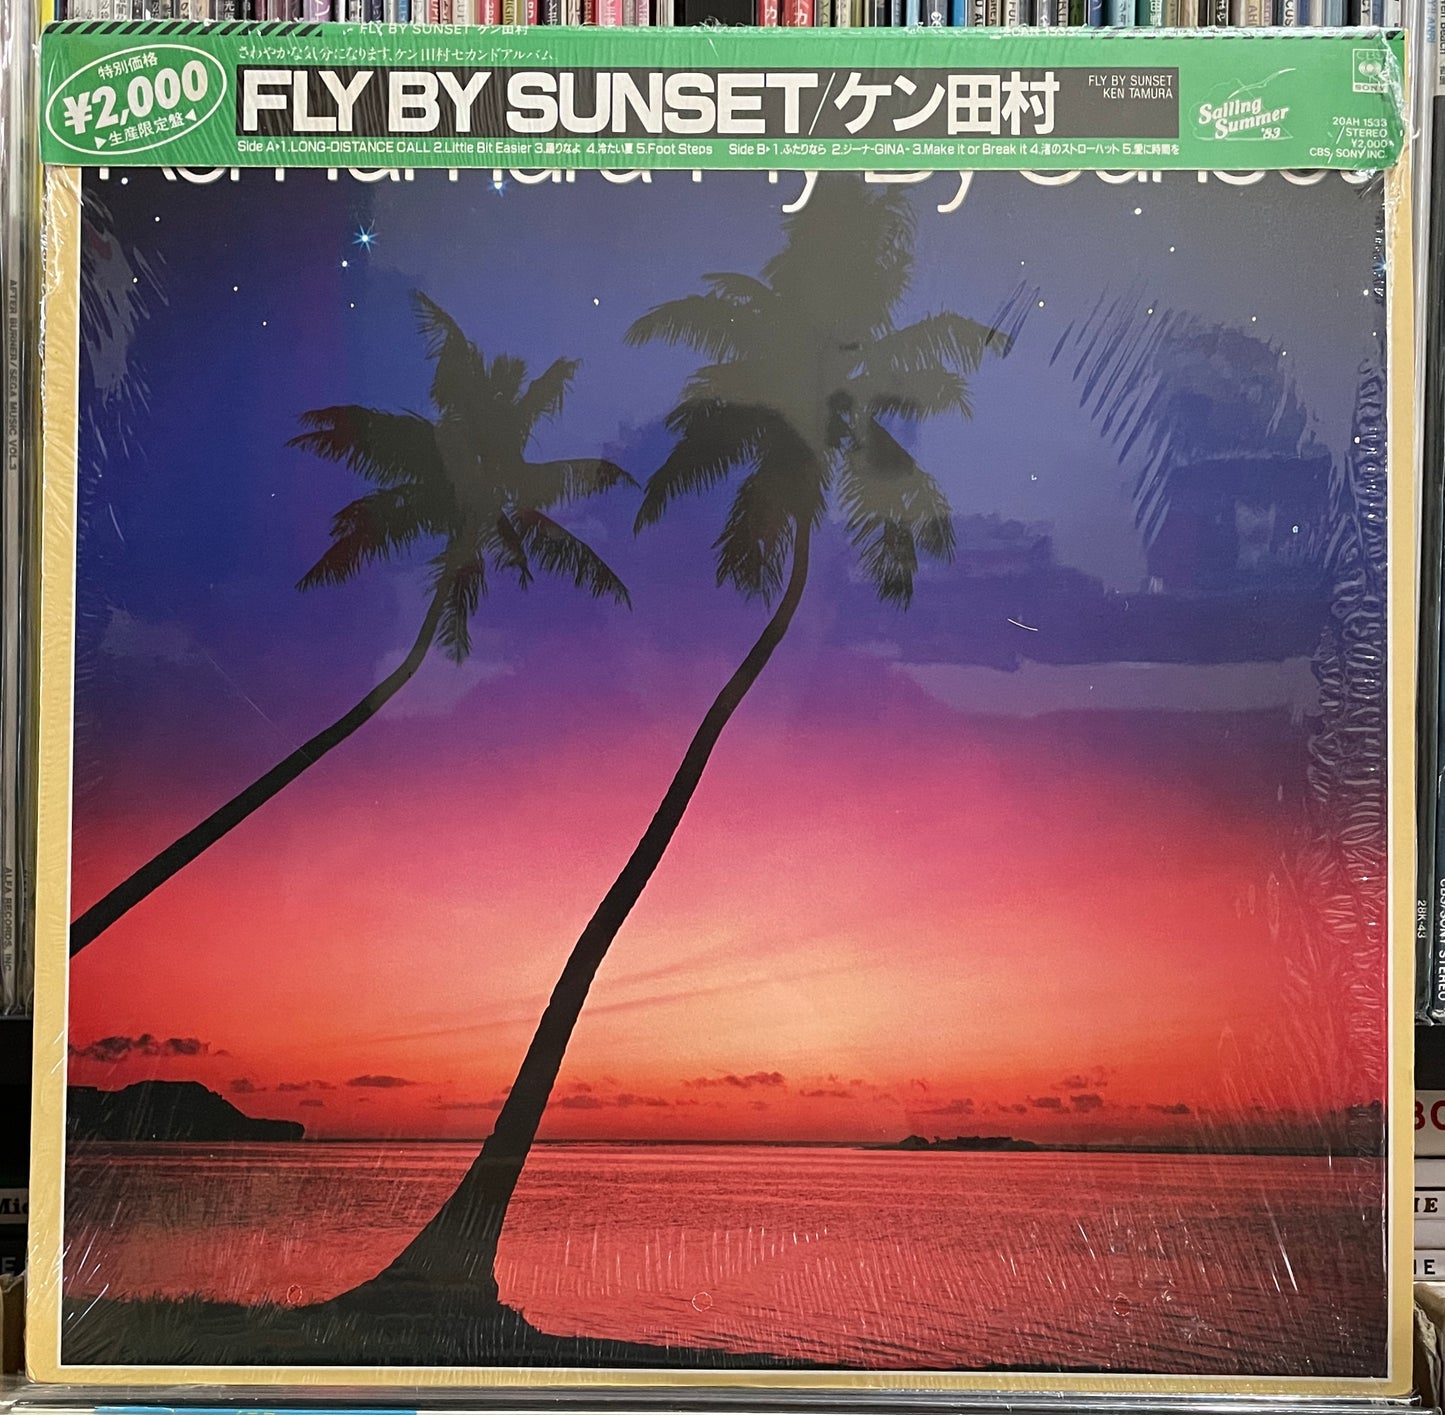 Ken Tamura "Fly By Sunset" (1983)